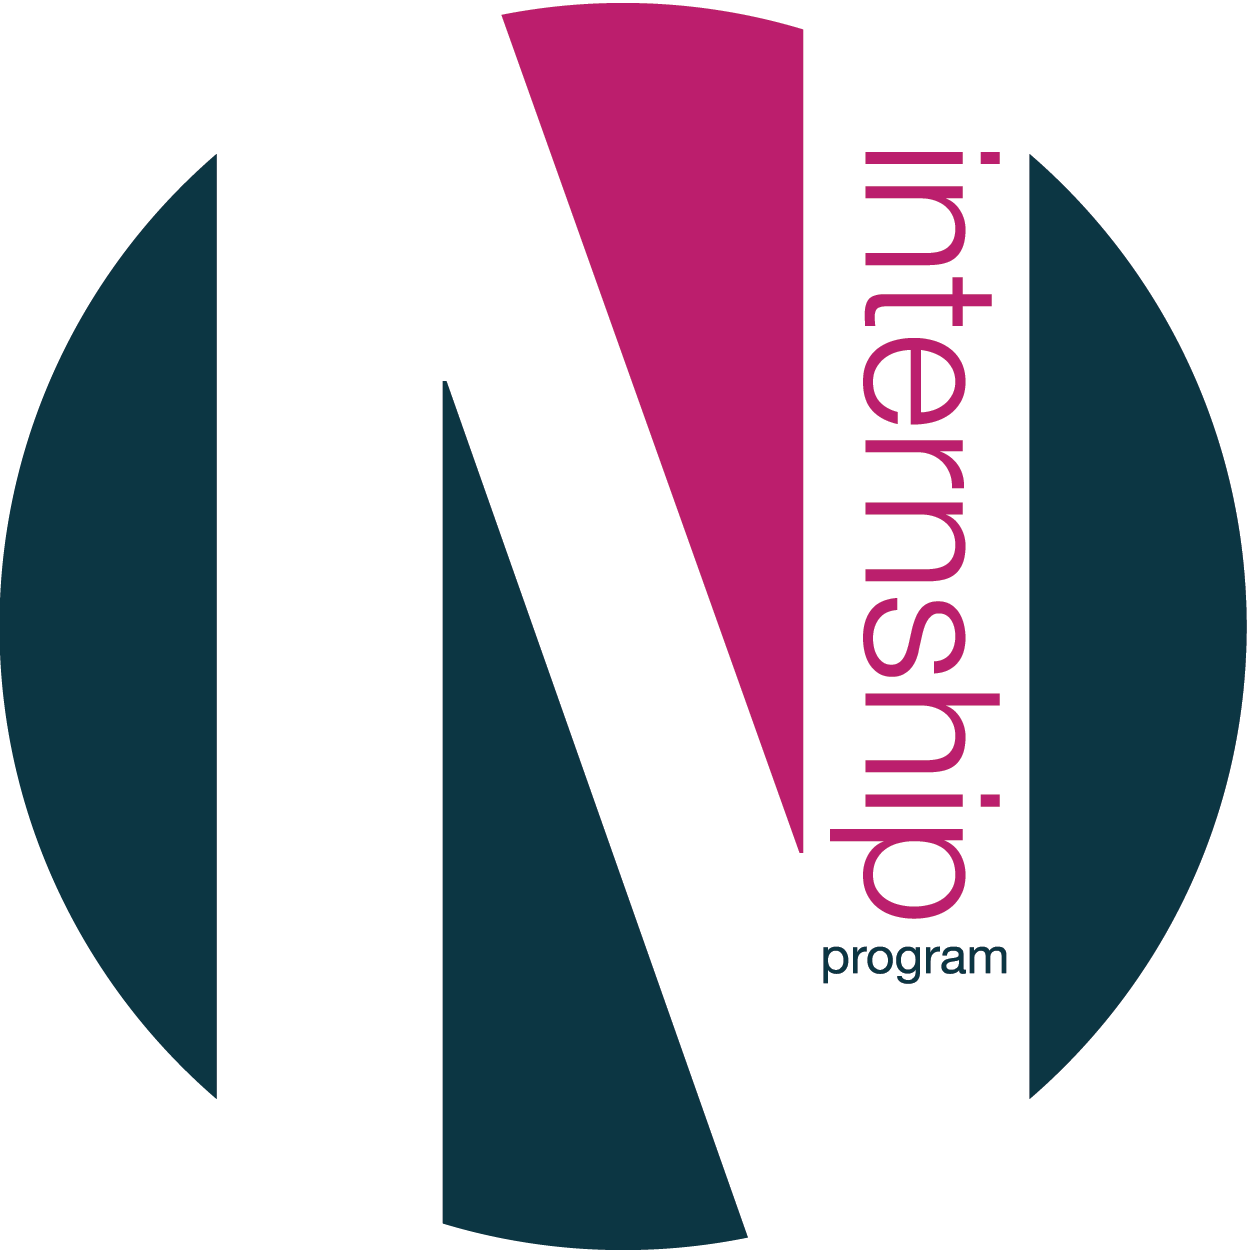 numensa internship logo - circle logo with white N